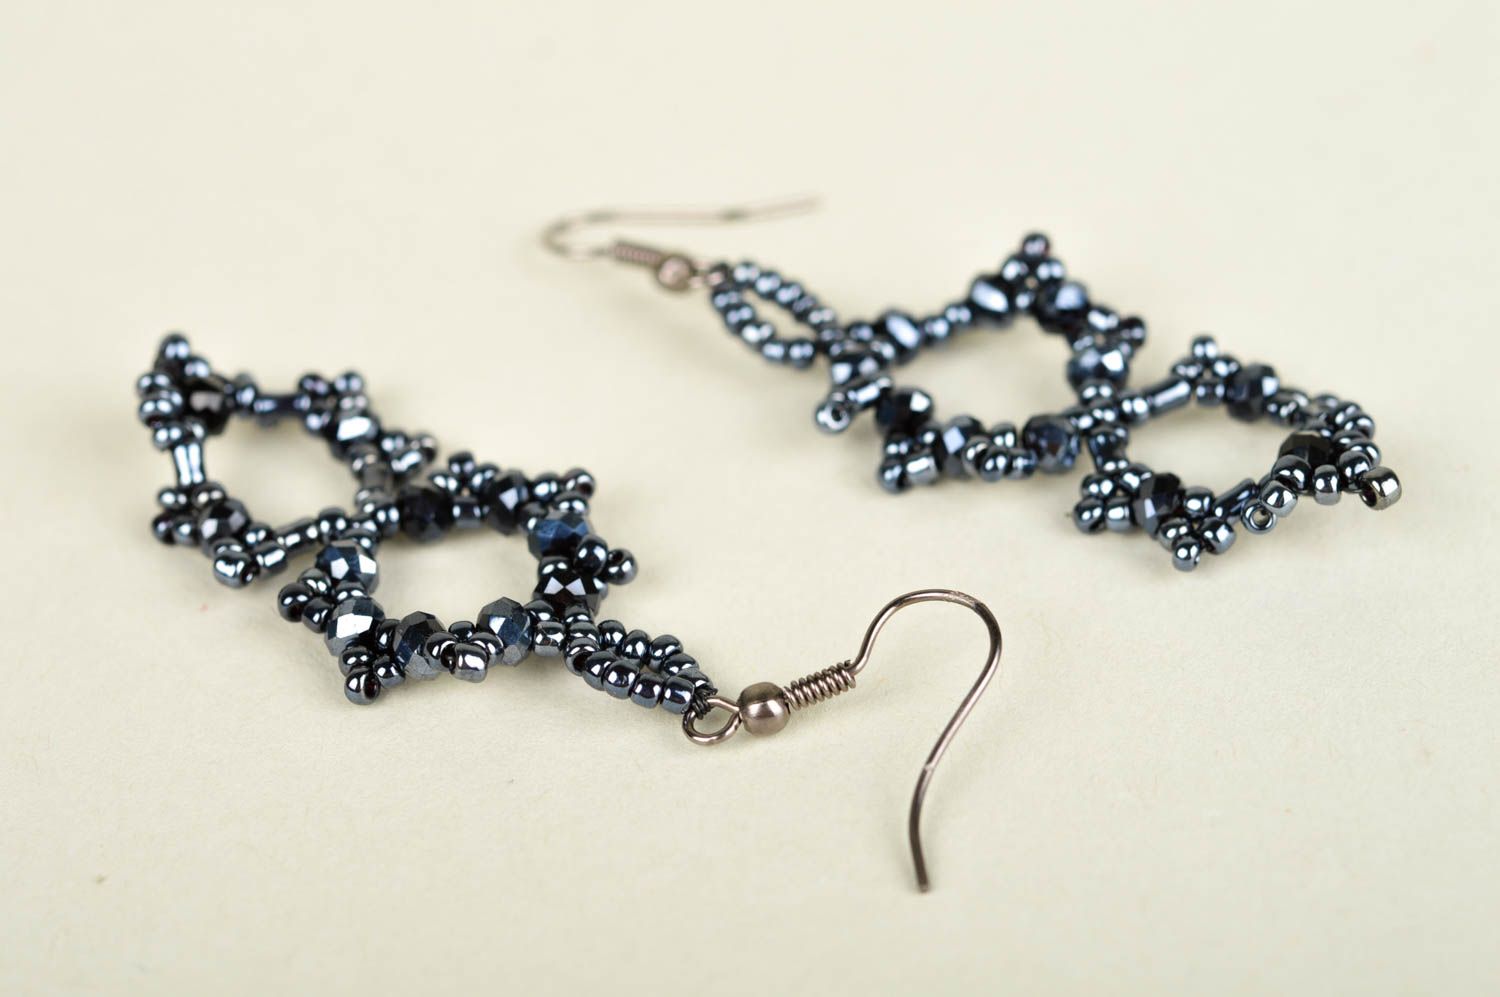 Homemade jewelry earrings for women stylish earrings designer accessories photo 5